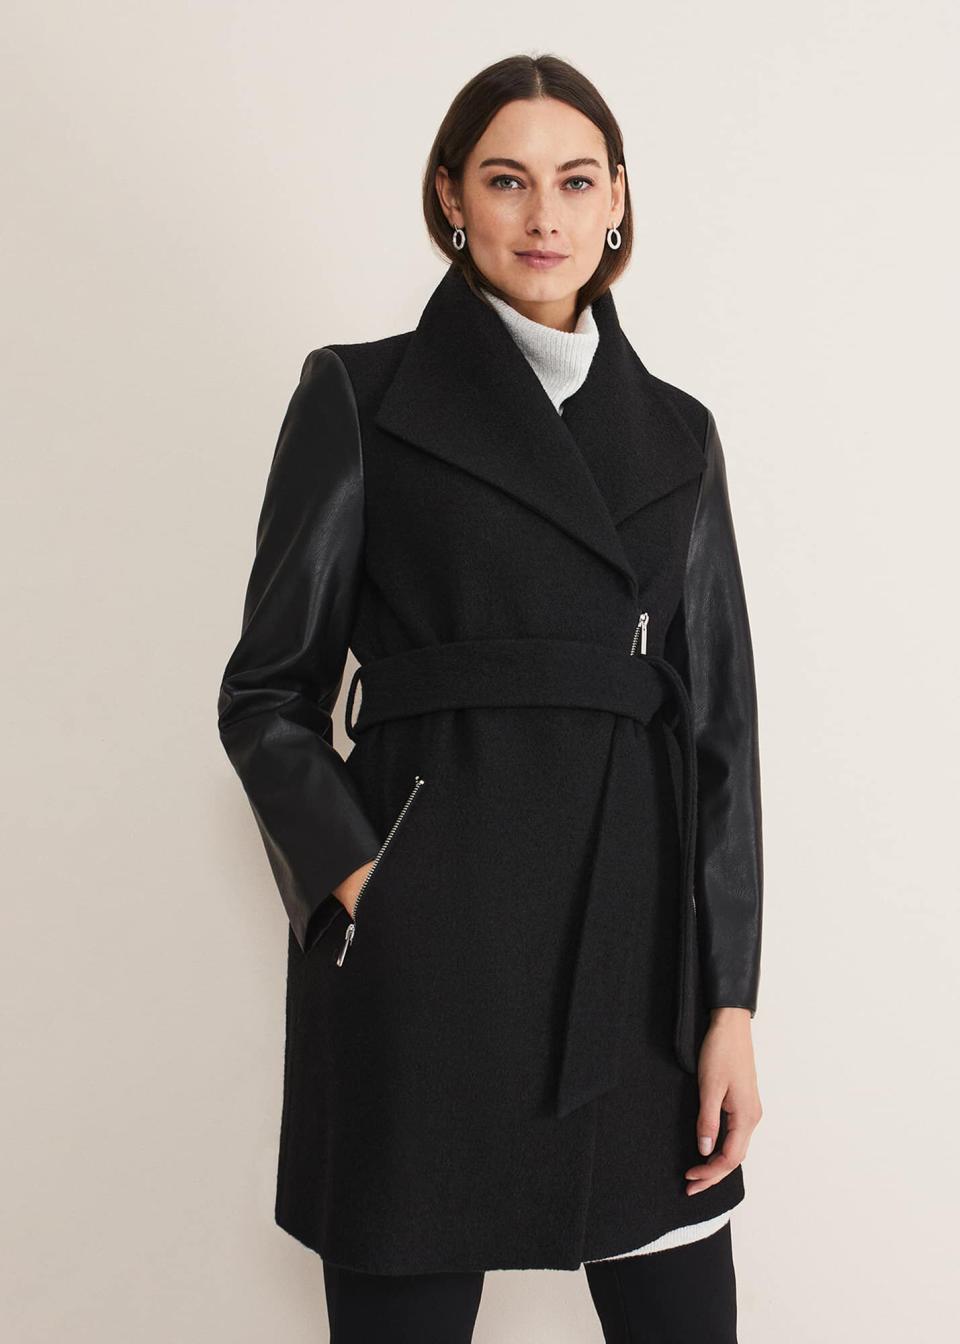 A stylish, go-with-anything coat. (Phase Eight)